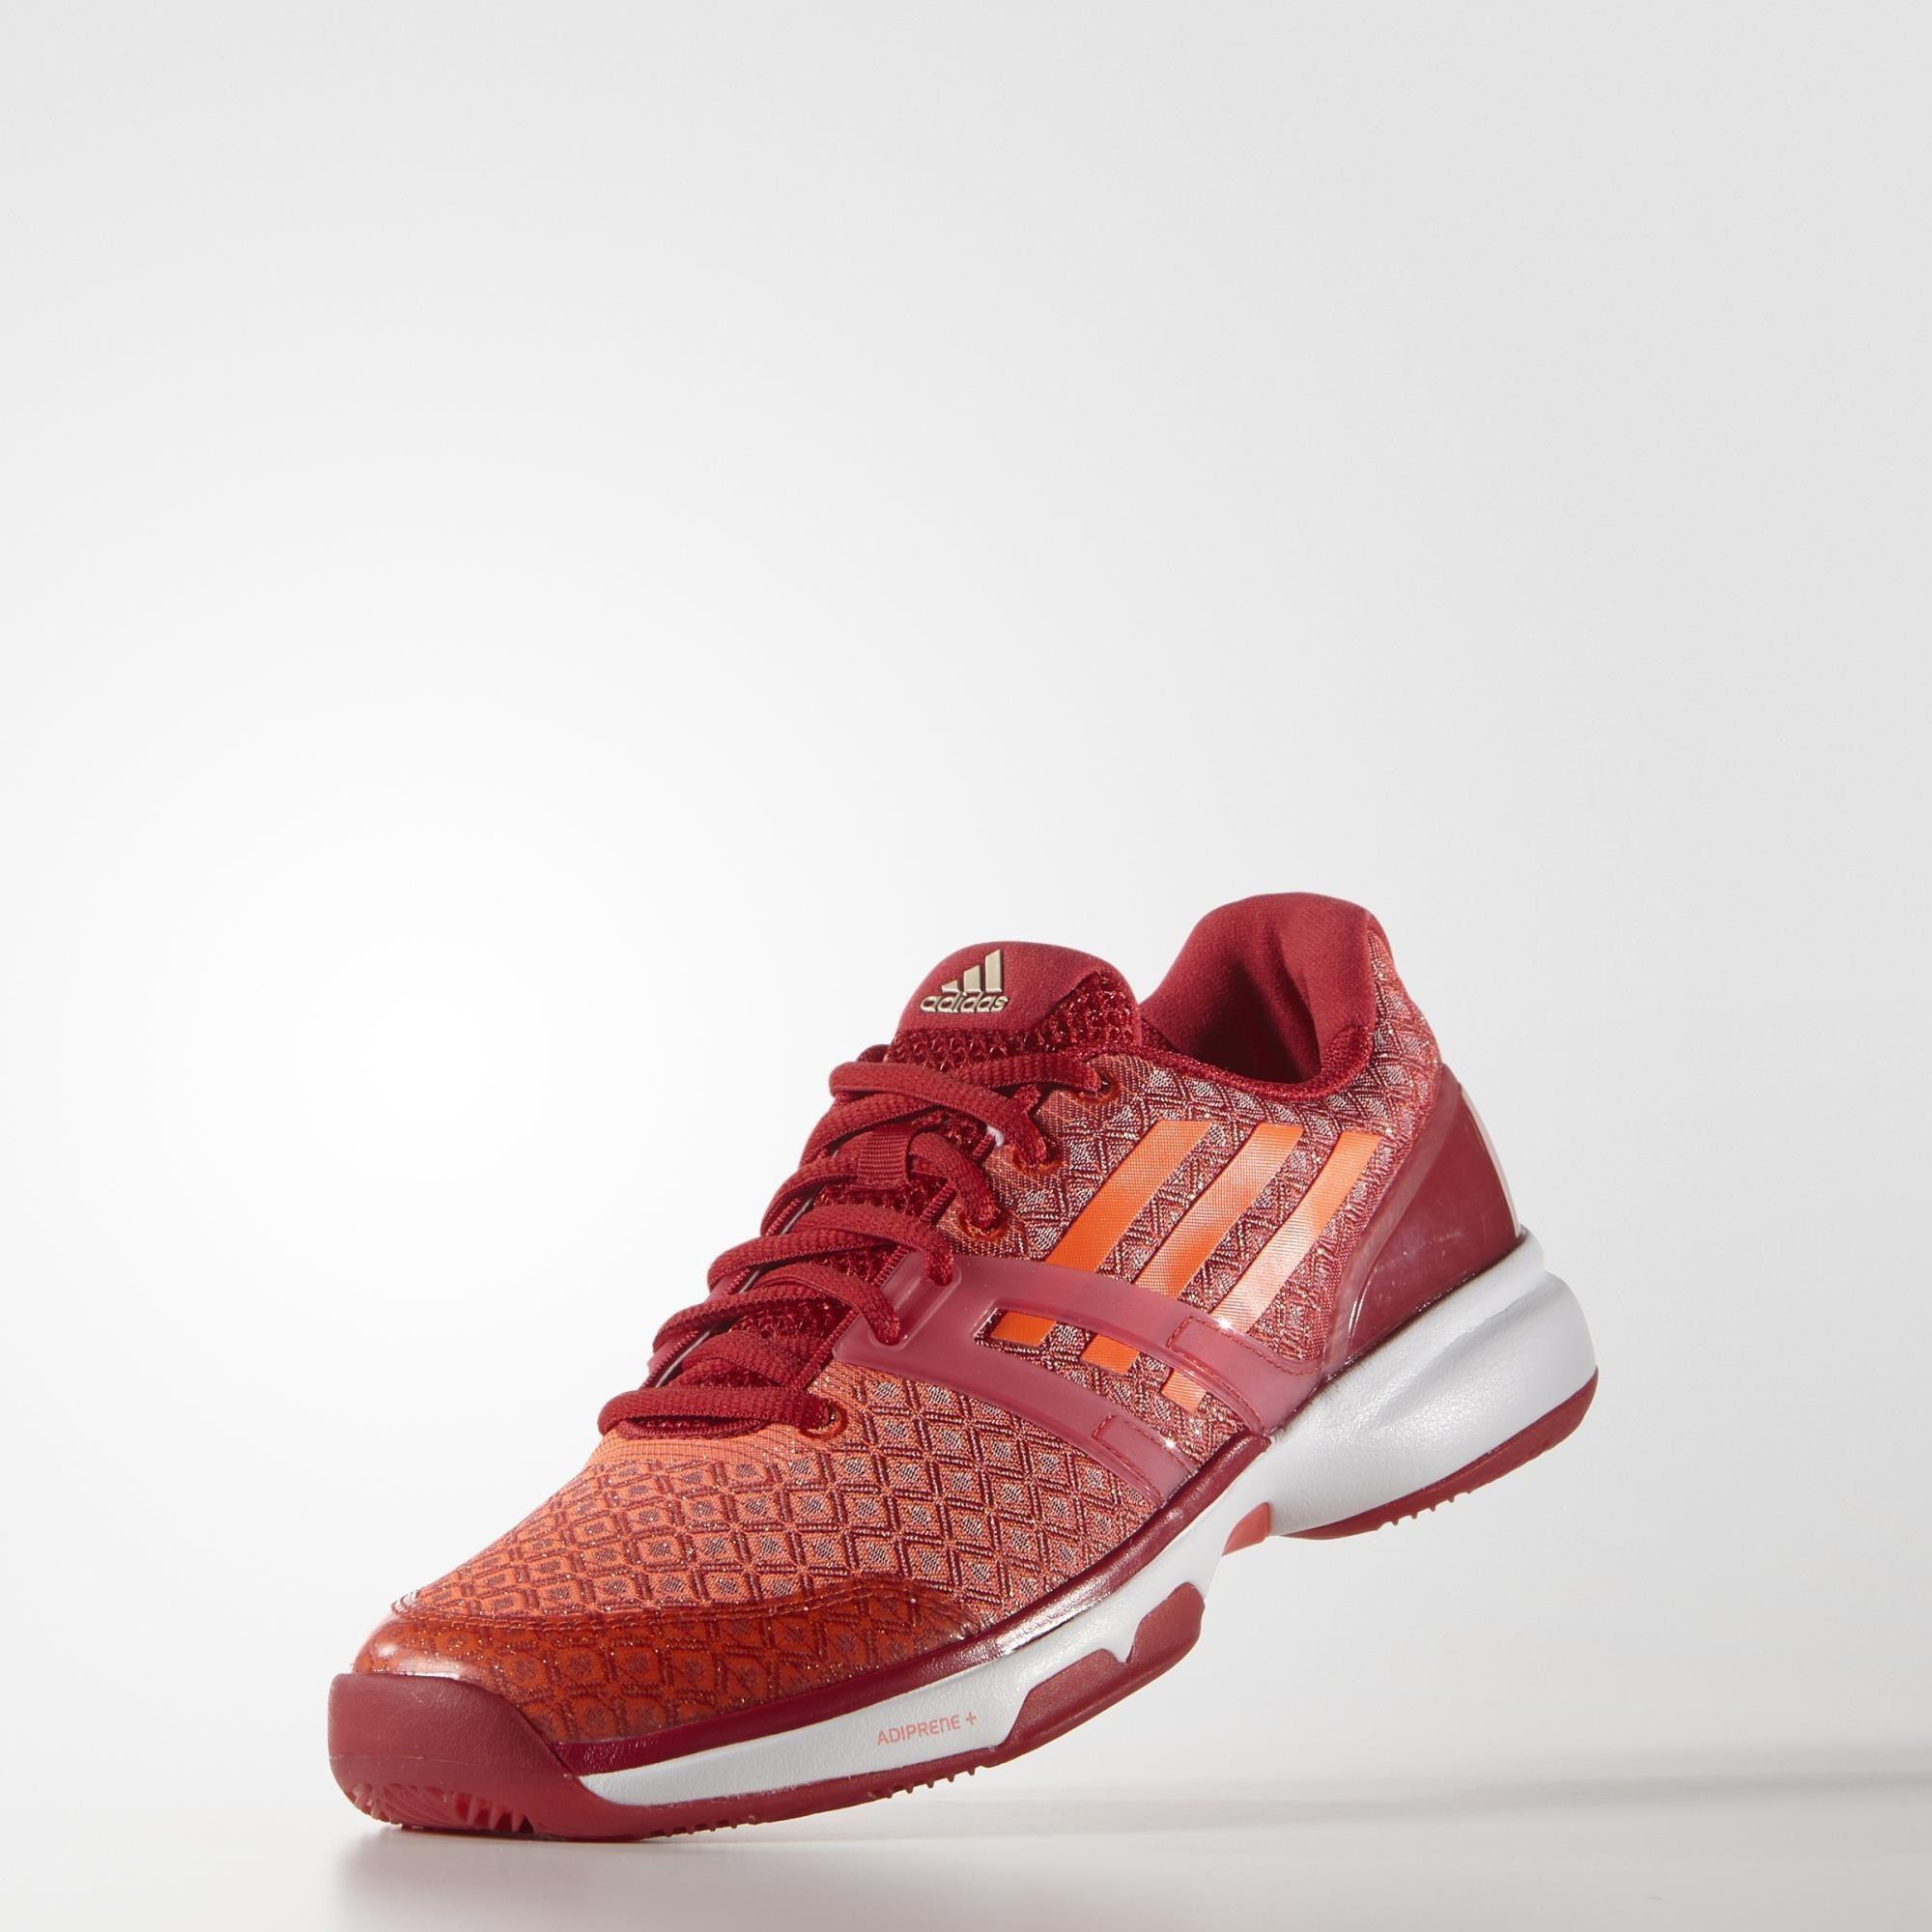 Adidas Womens Adizero Ubersonic Tennis Shoes - Power Red/Solar Red - www.semadata.org